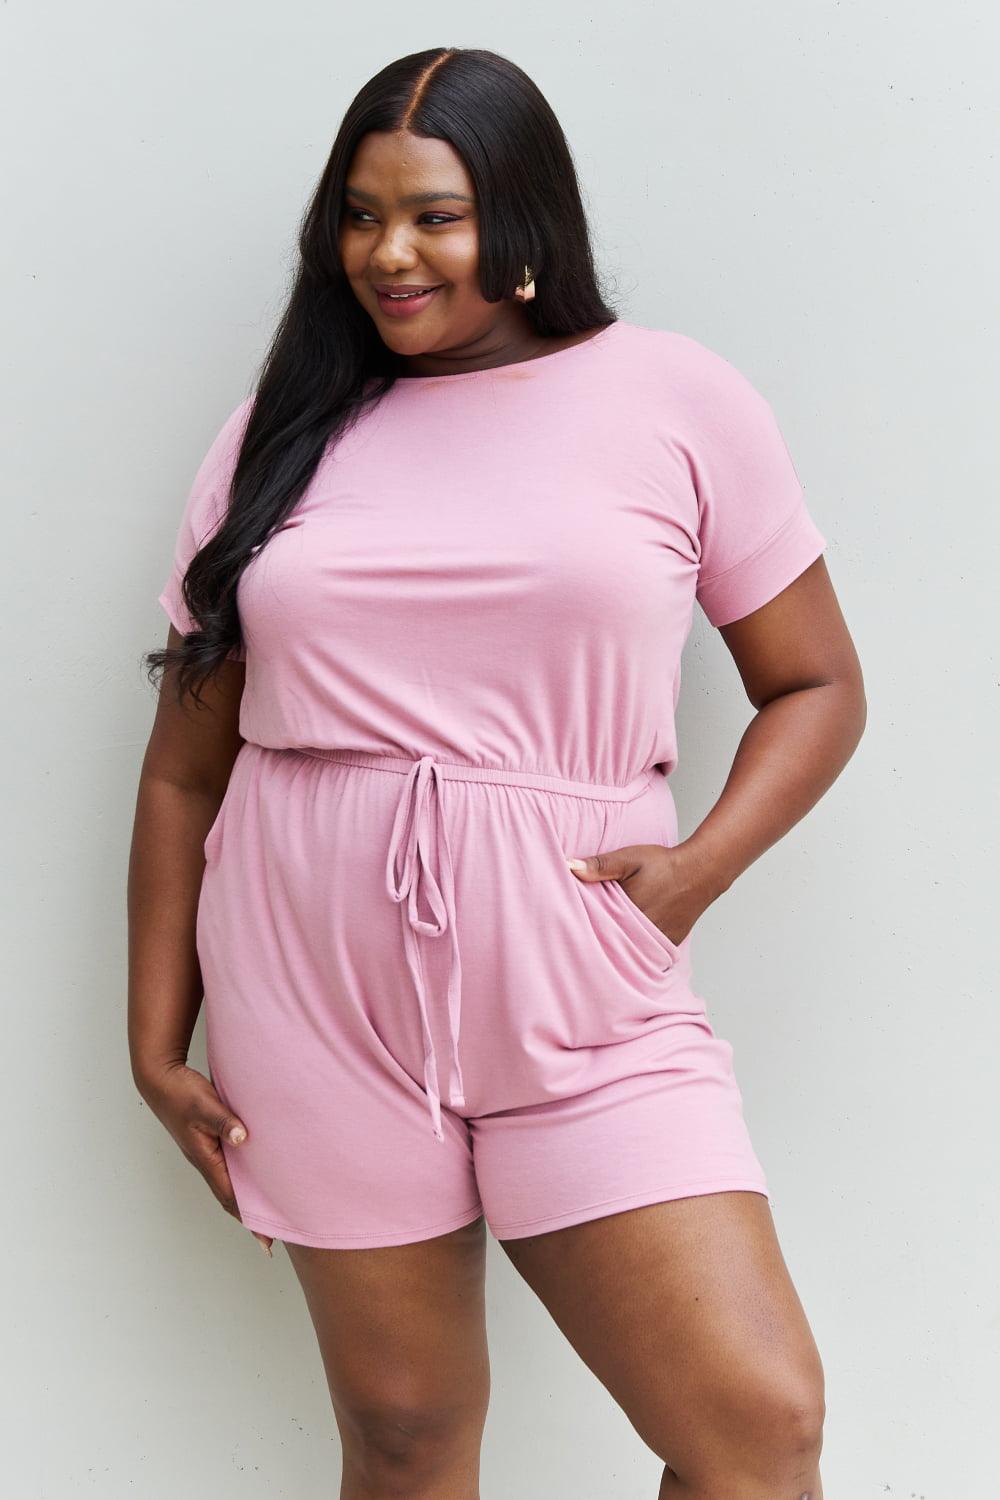 Bona Fide Fashion - Chilled Out Full Size Short Sleeve Romper in Light Carnation Pink - Women Fashion - Bona Fide Fashion